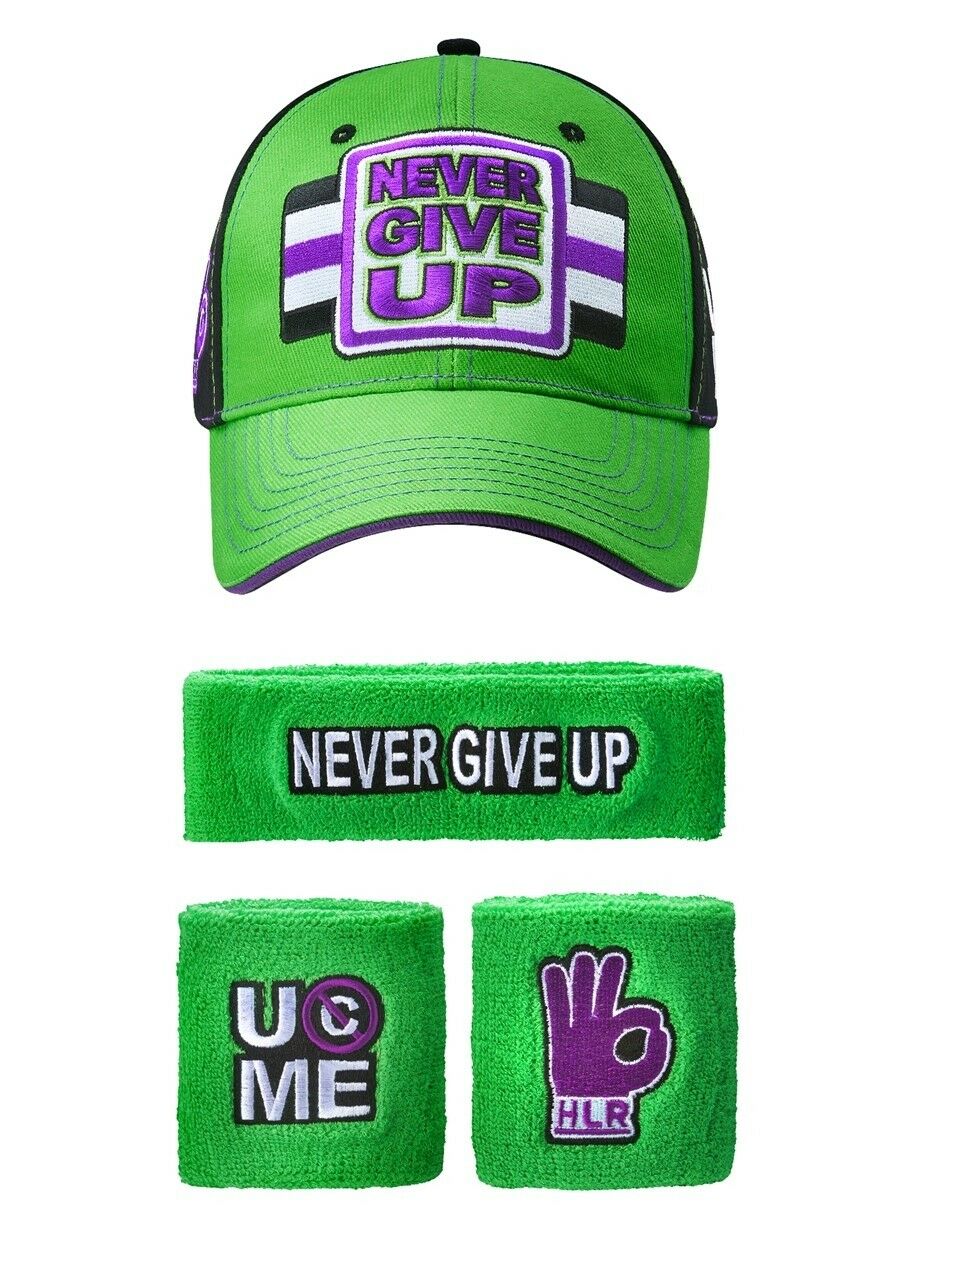 John Cena Wwe Never Give Up Green Purple Baseball Hat Headband Wristband Set